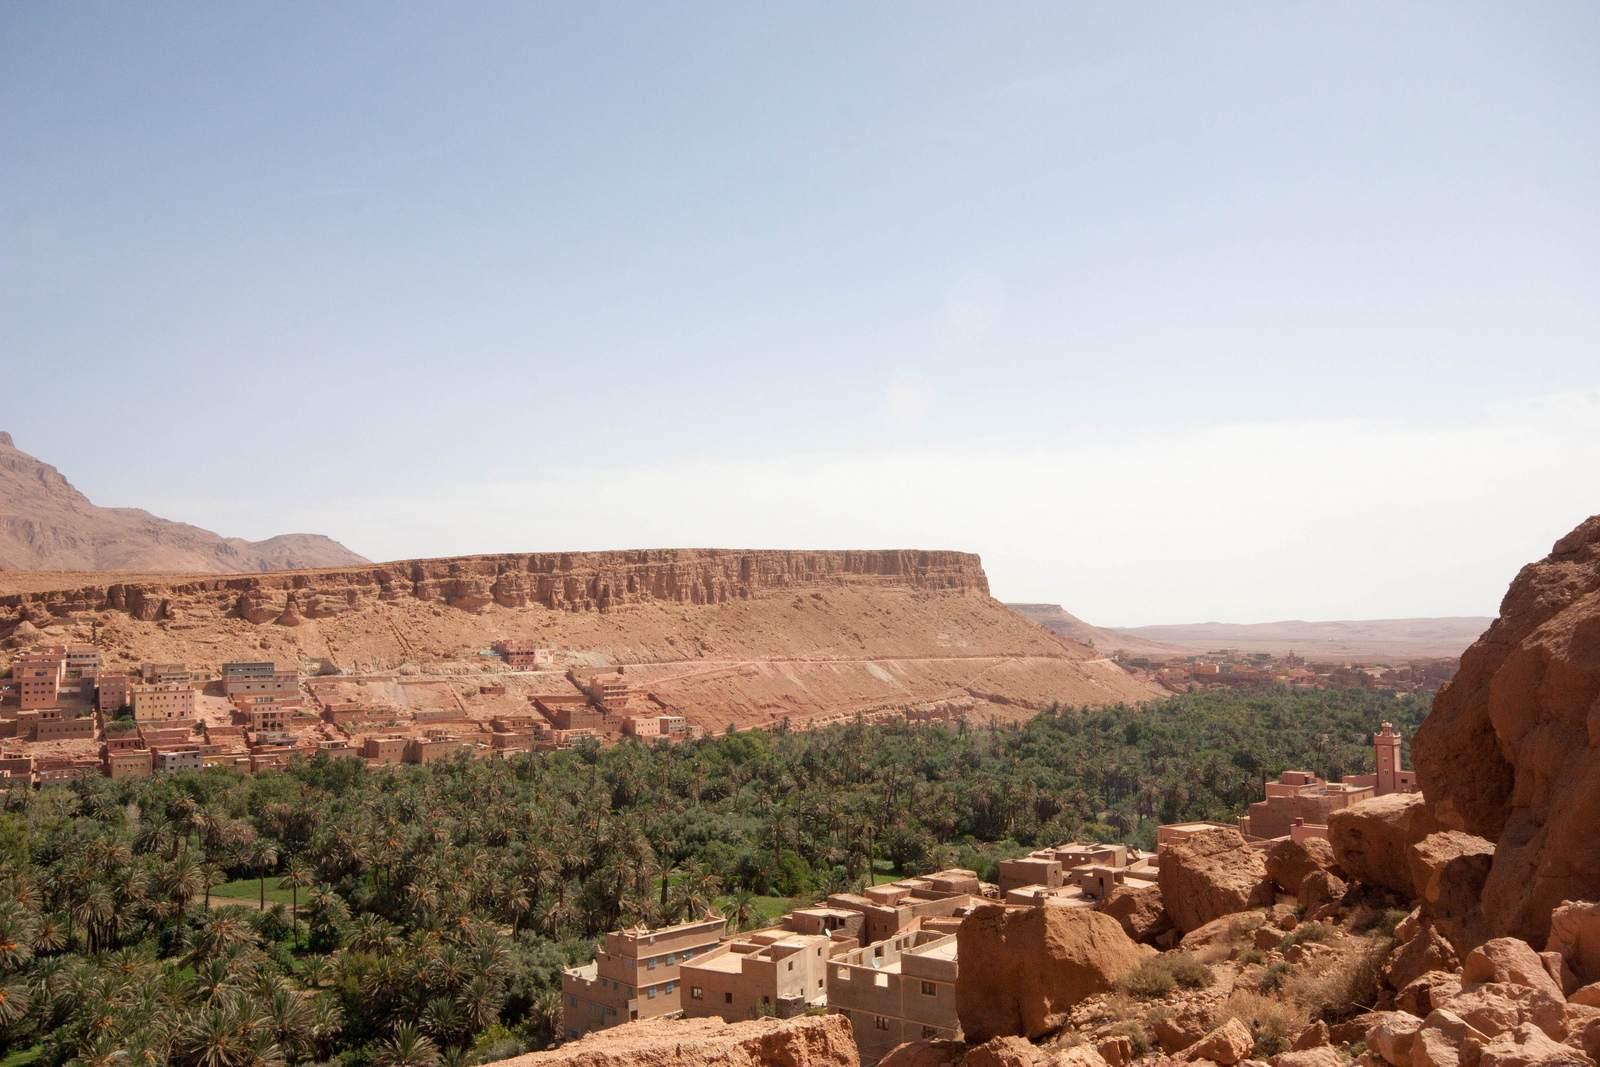 The Draa Valley in Sahara Desert, Morocco